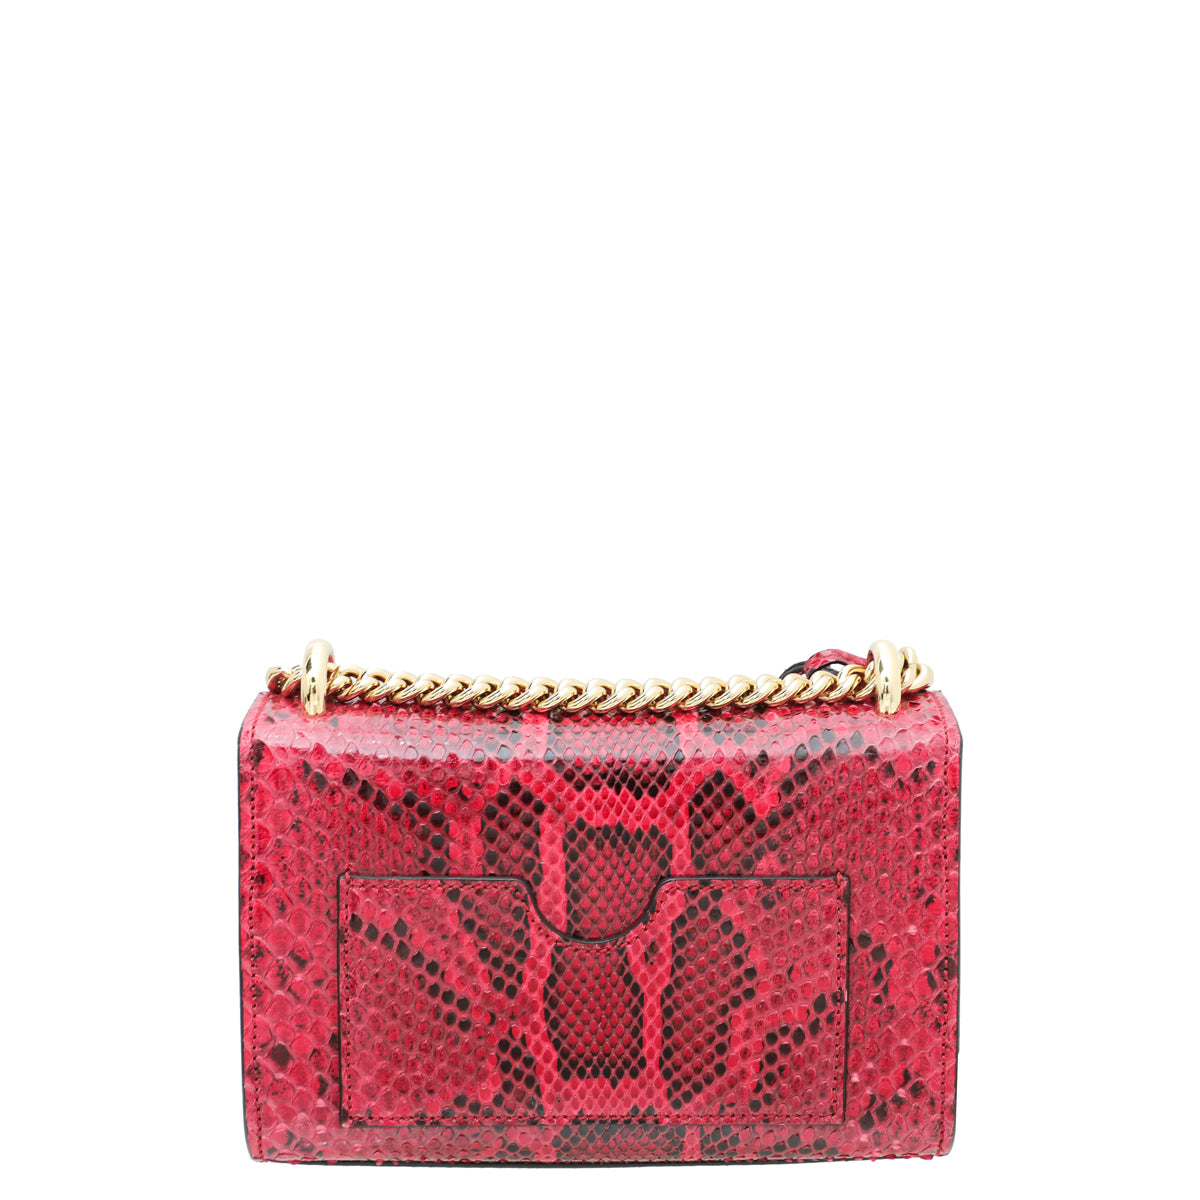 Gucci Red Python Padlock Small Shoulder Bag